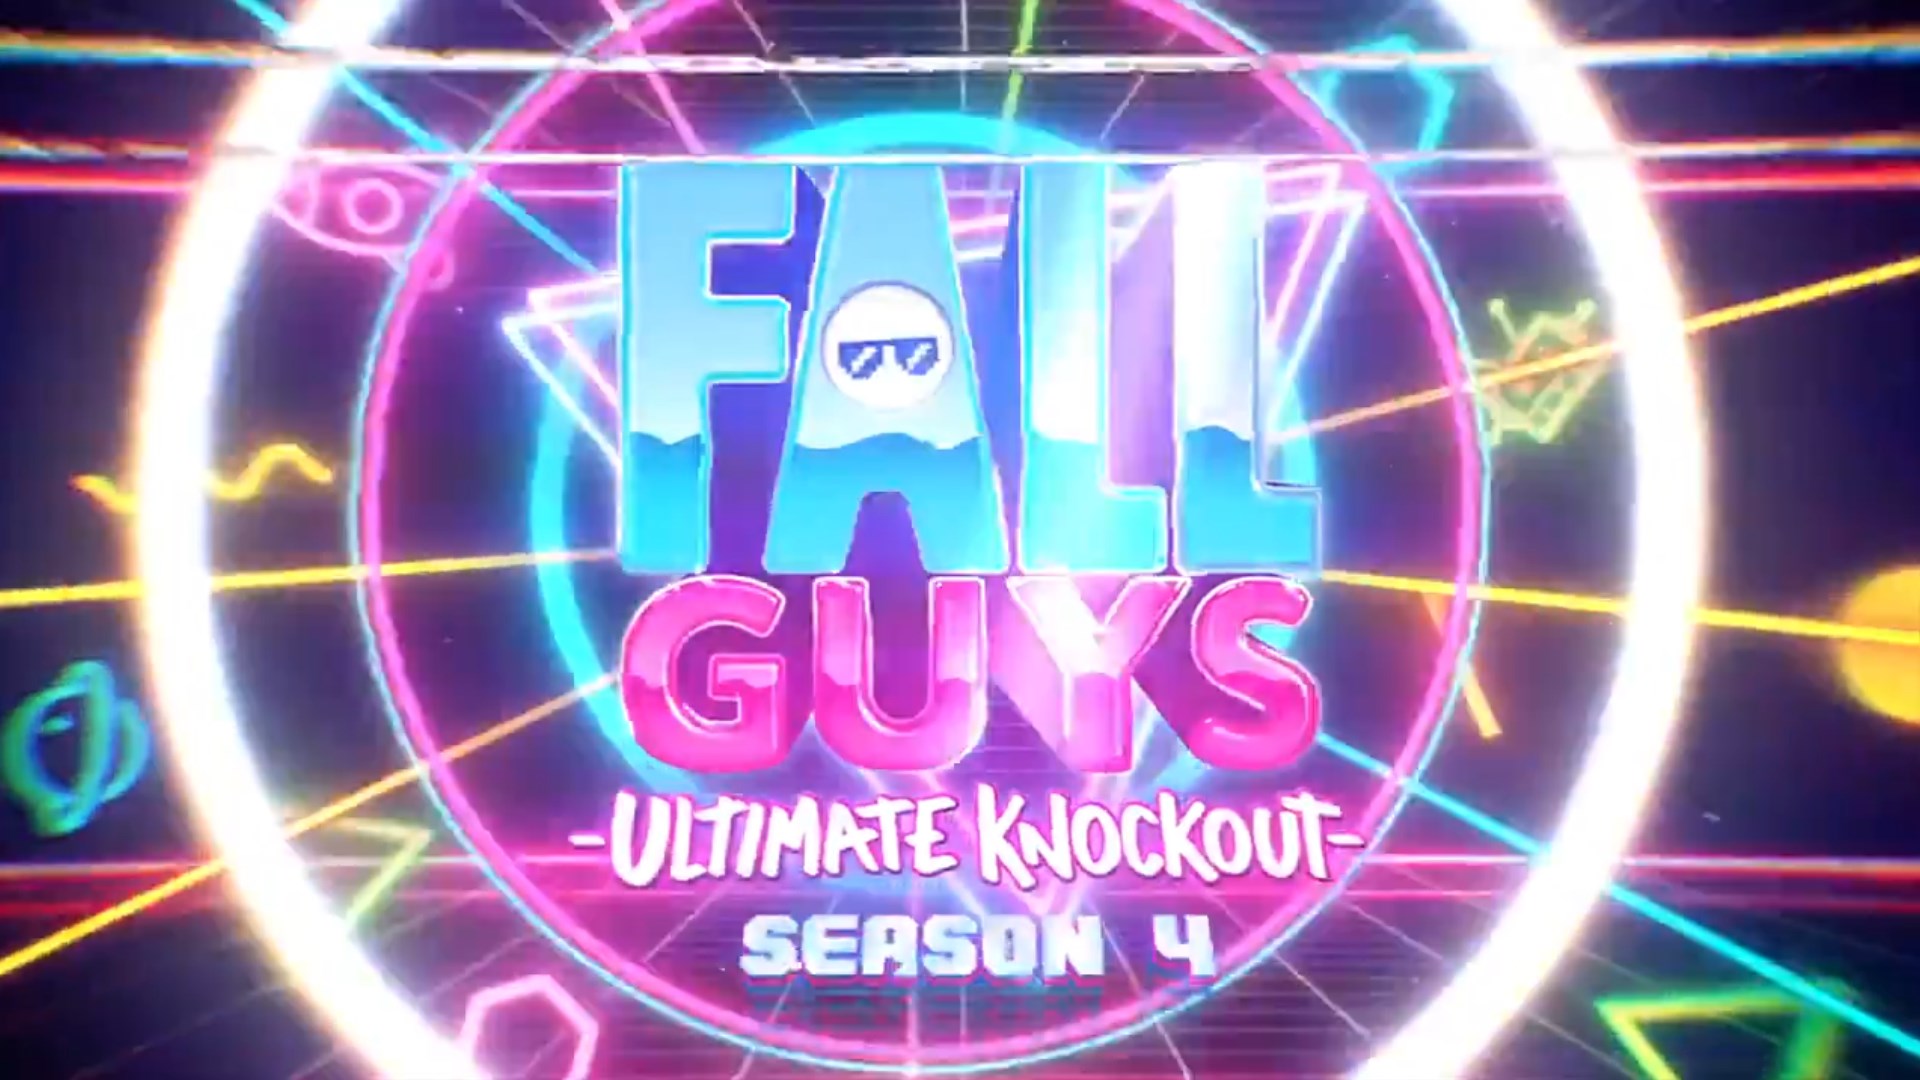 Fall Guys Season 4